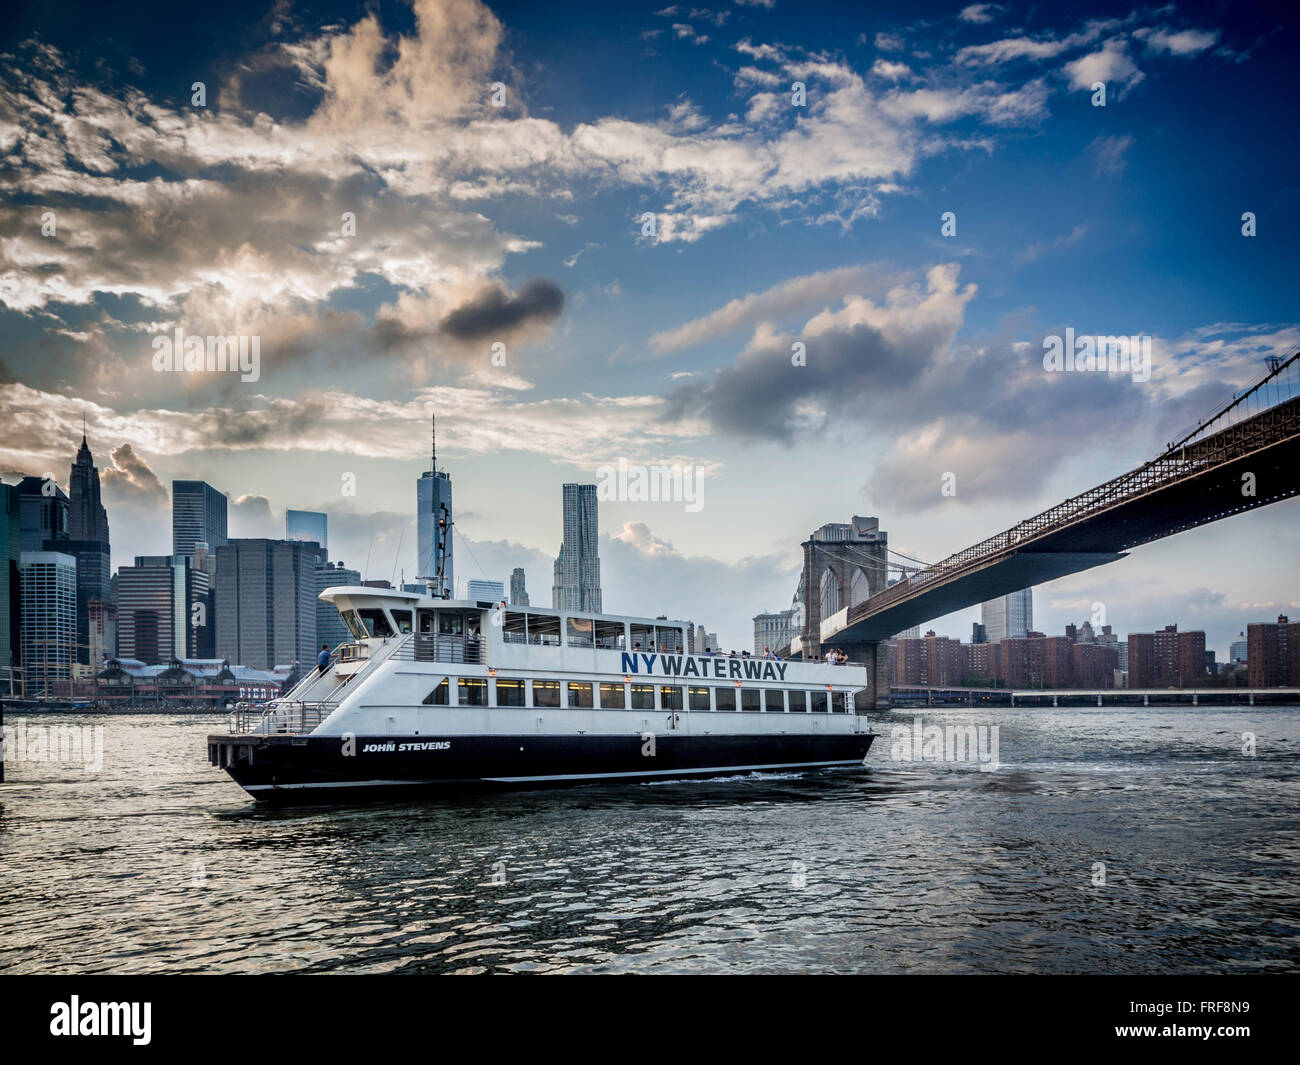 NY Waterway bateau avec pont de Brooklyn sur l'East River, New York, USA Banque D'Images